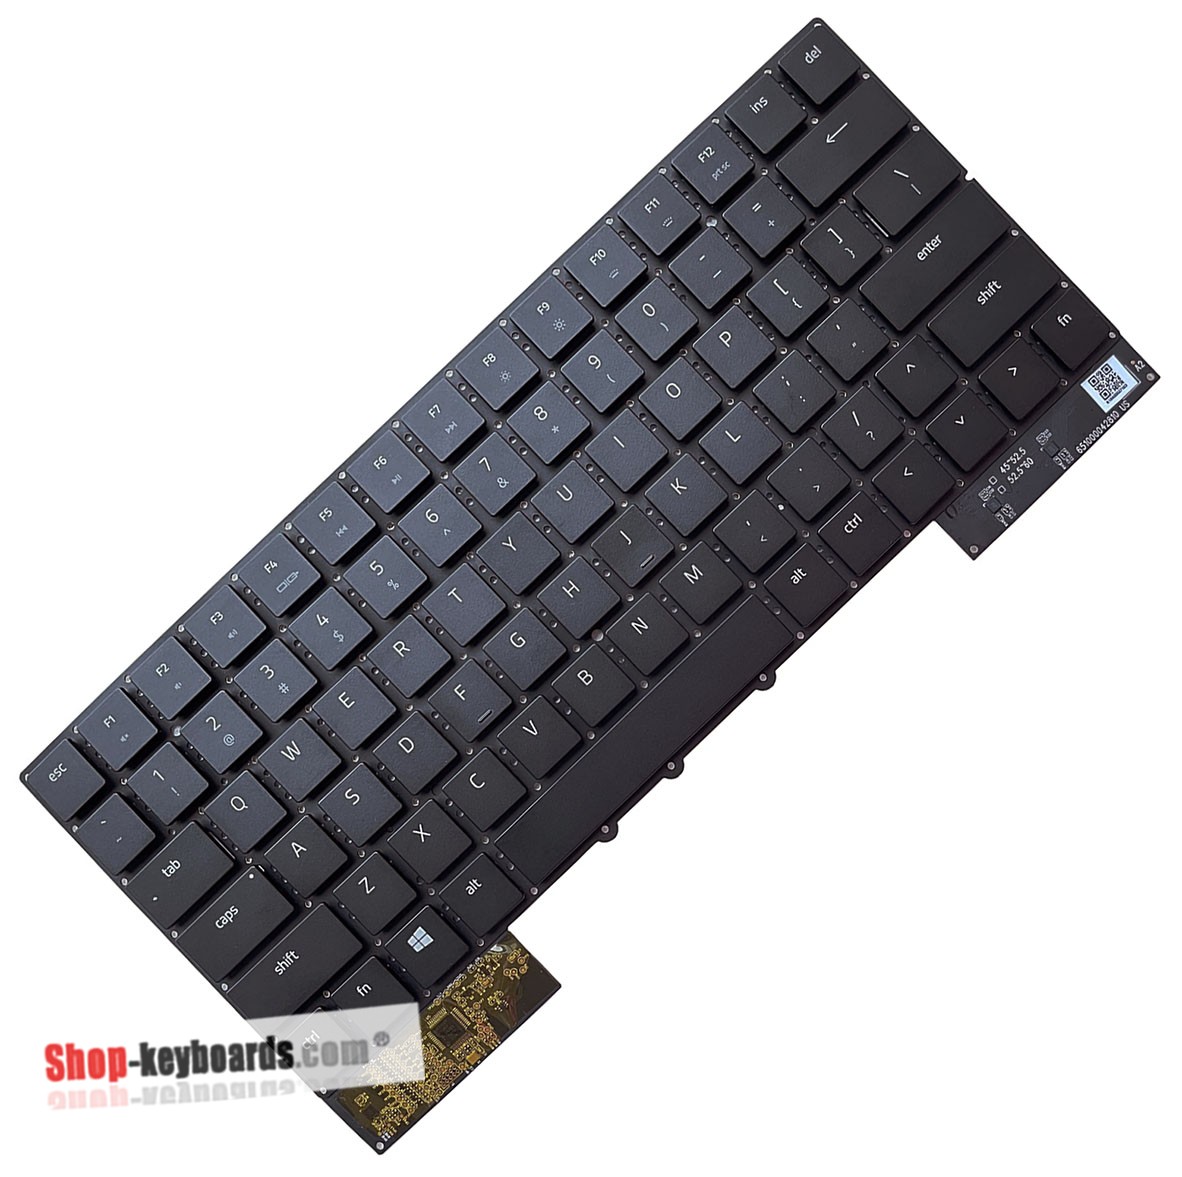 RAZER RZ09-01682 Keyboard replacement